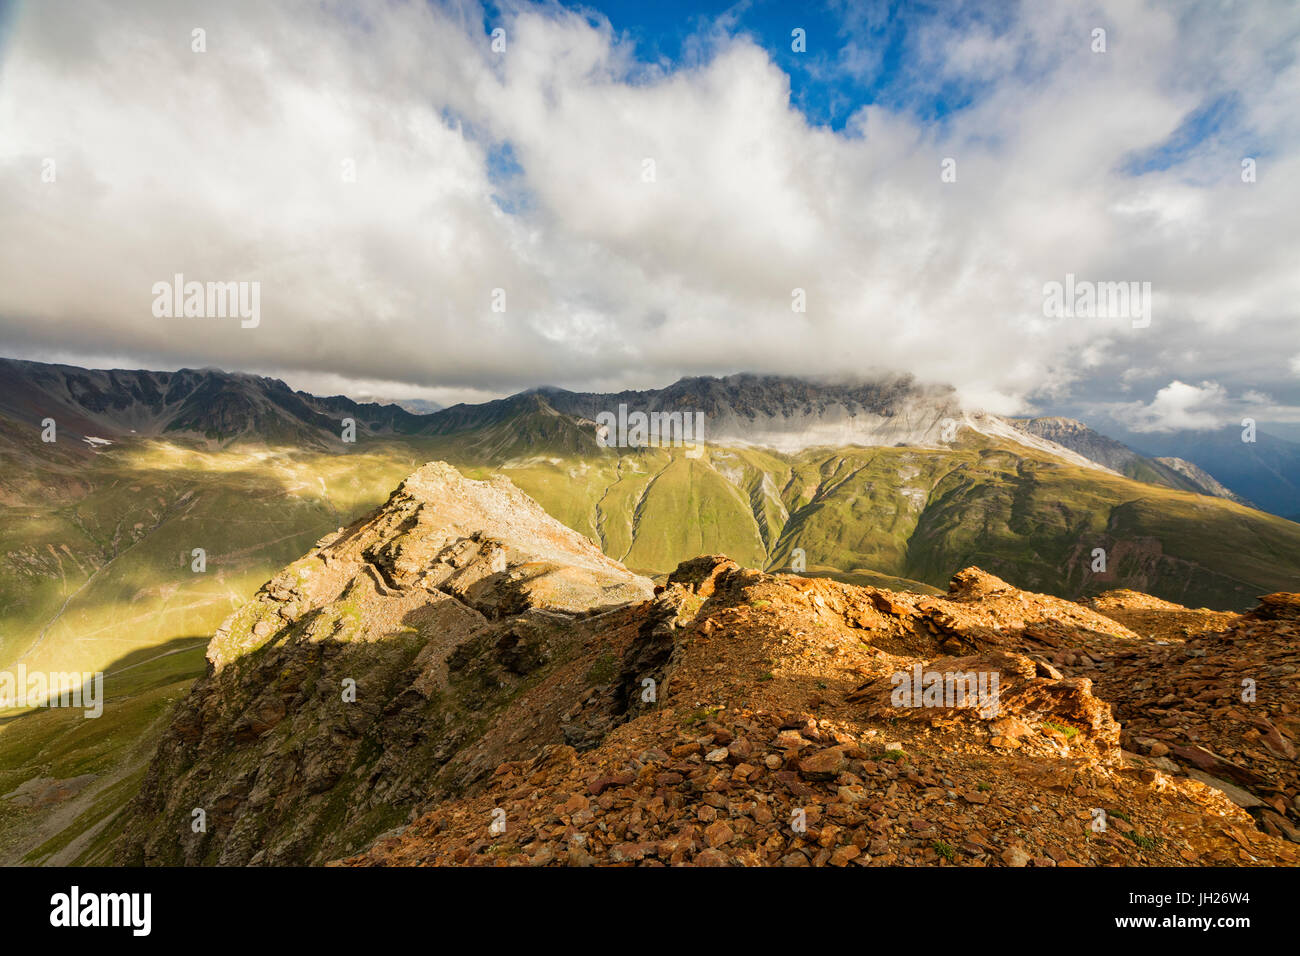 Sun and clouds on the rocky crest of the Alps, Filon del Mott, Bormio, Braulio Valley, Stelvio Pass, Valtellina, Lombardy, Italy Stock Photo